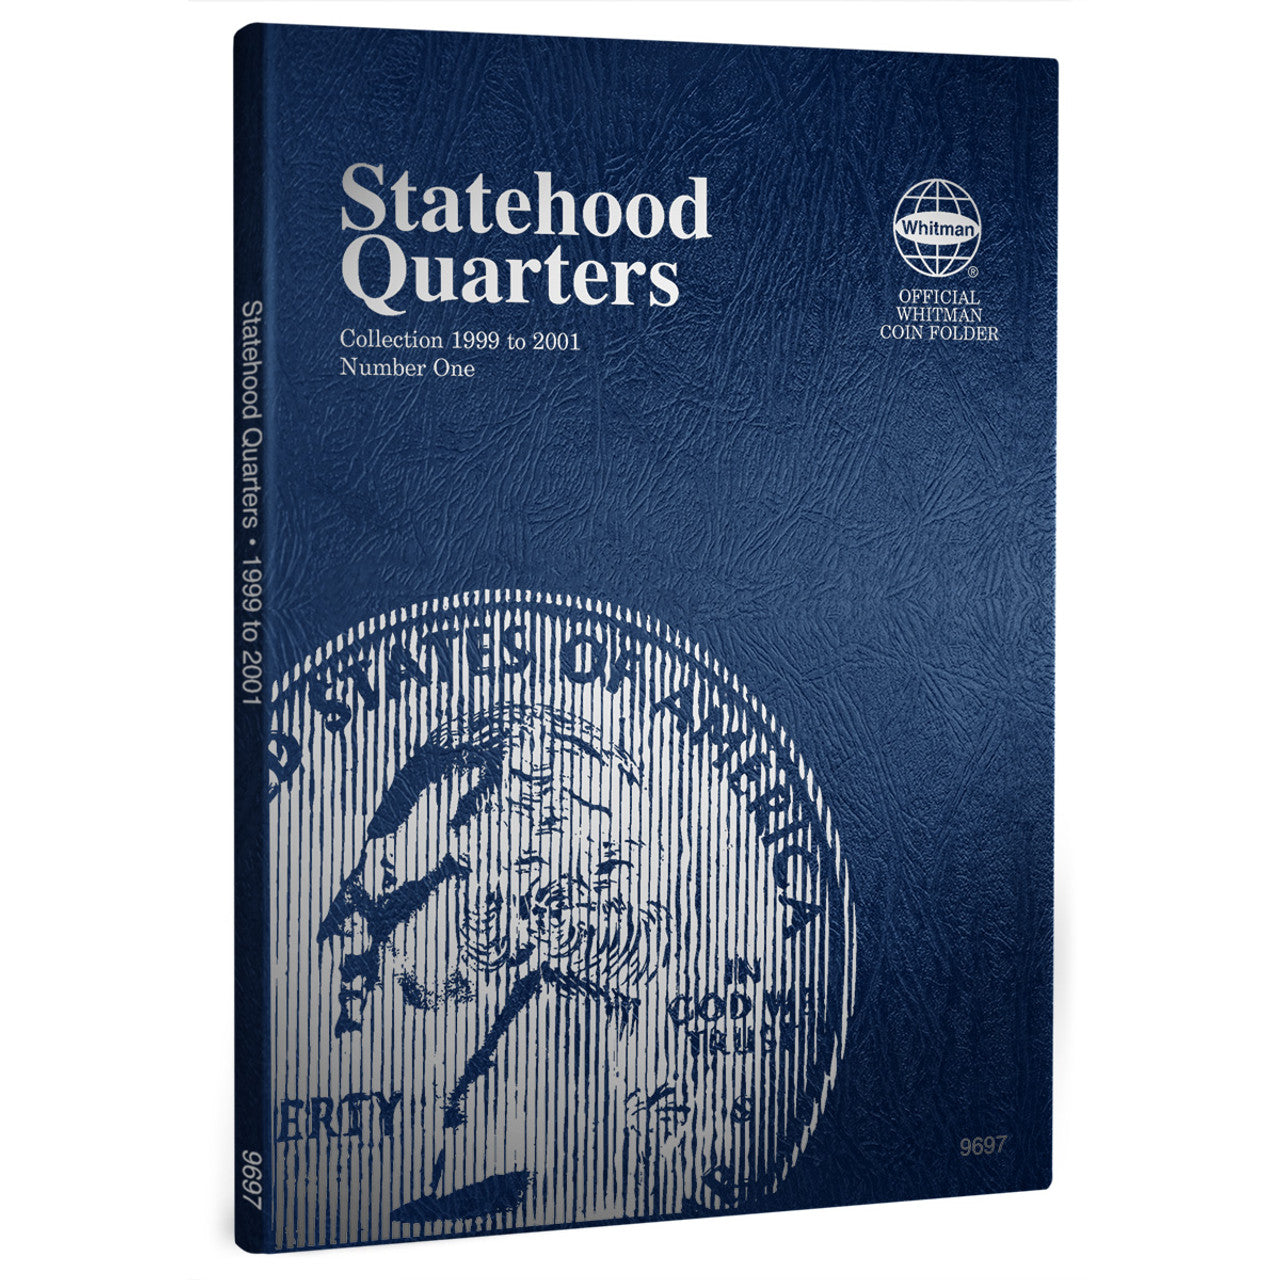 Whitman Statehood Quarters #1 1999-2009